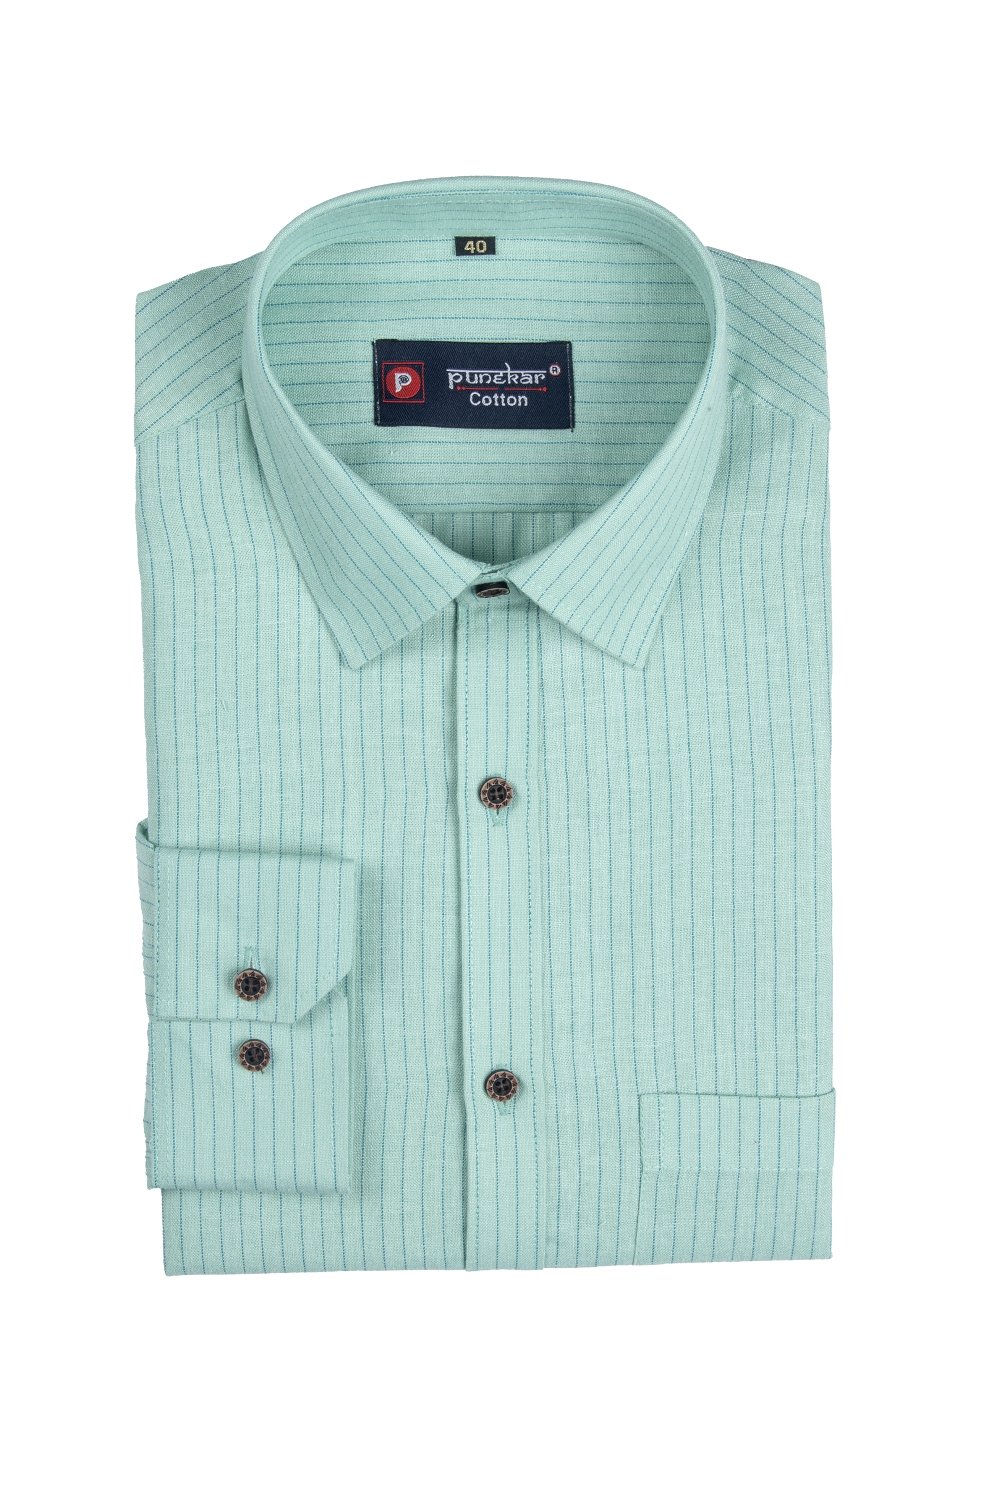 Punekar Cotton Mint Color Linning Criss Cross Woven Cotton Shirt for Men&